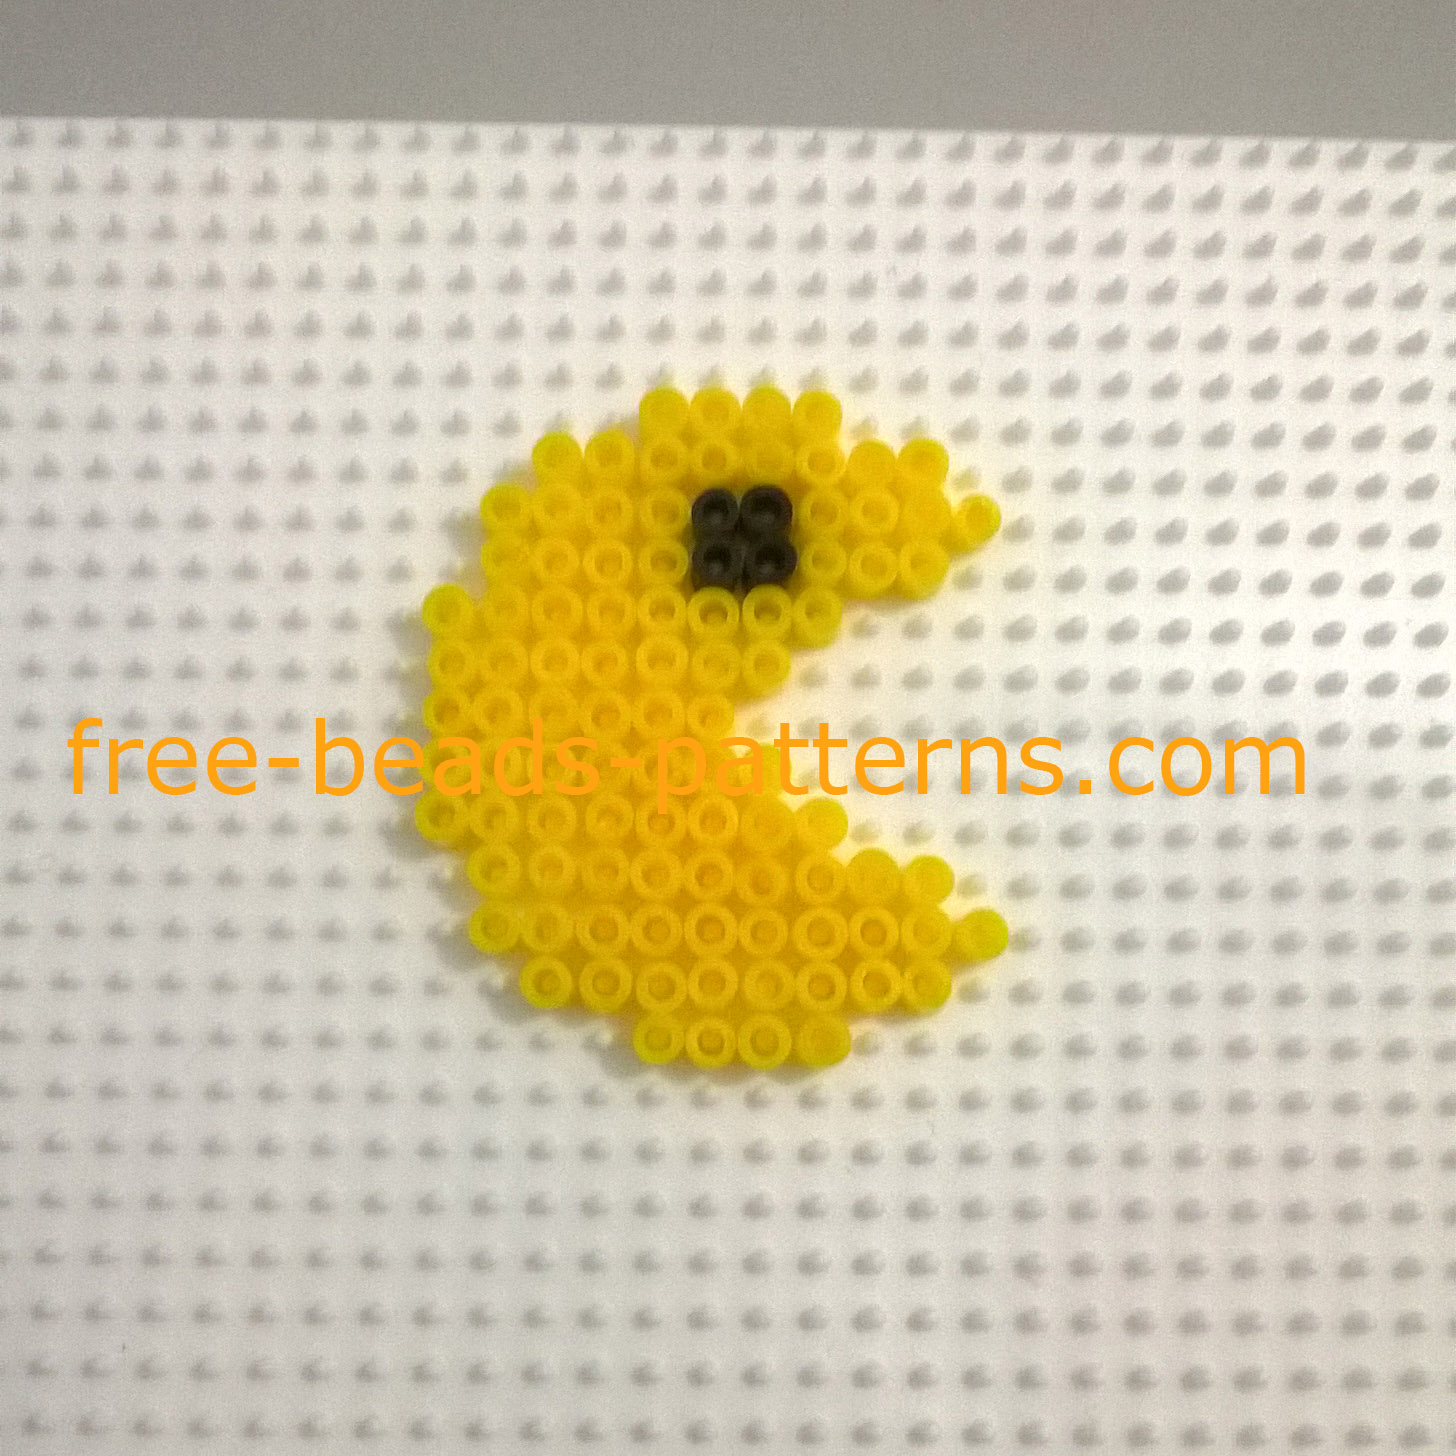 Pacman keychain work photos Hama Beads author site user Bill (4)